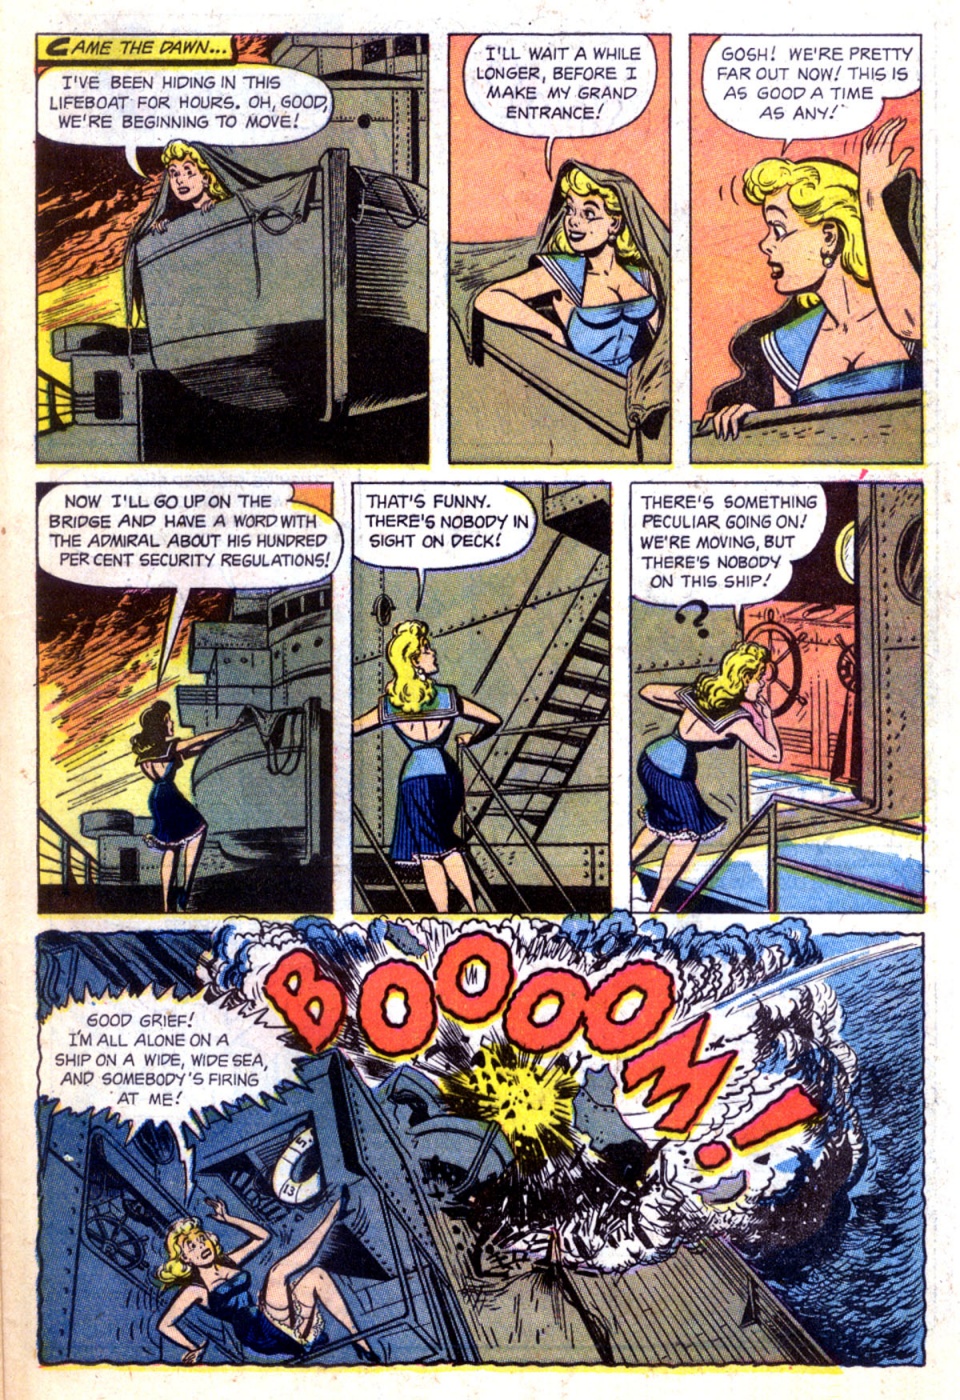 Anchors the Salt Water Daffy - Comics (c) (25)